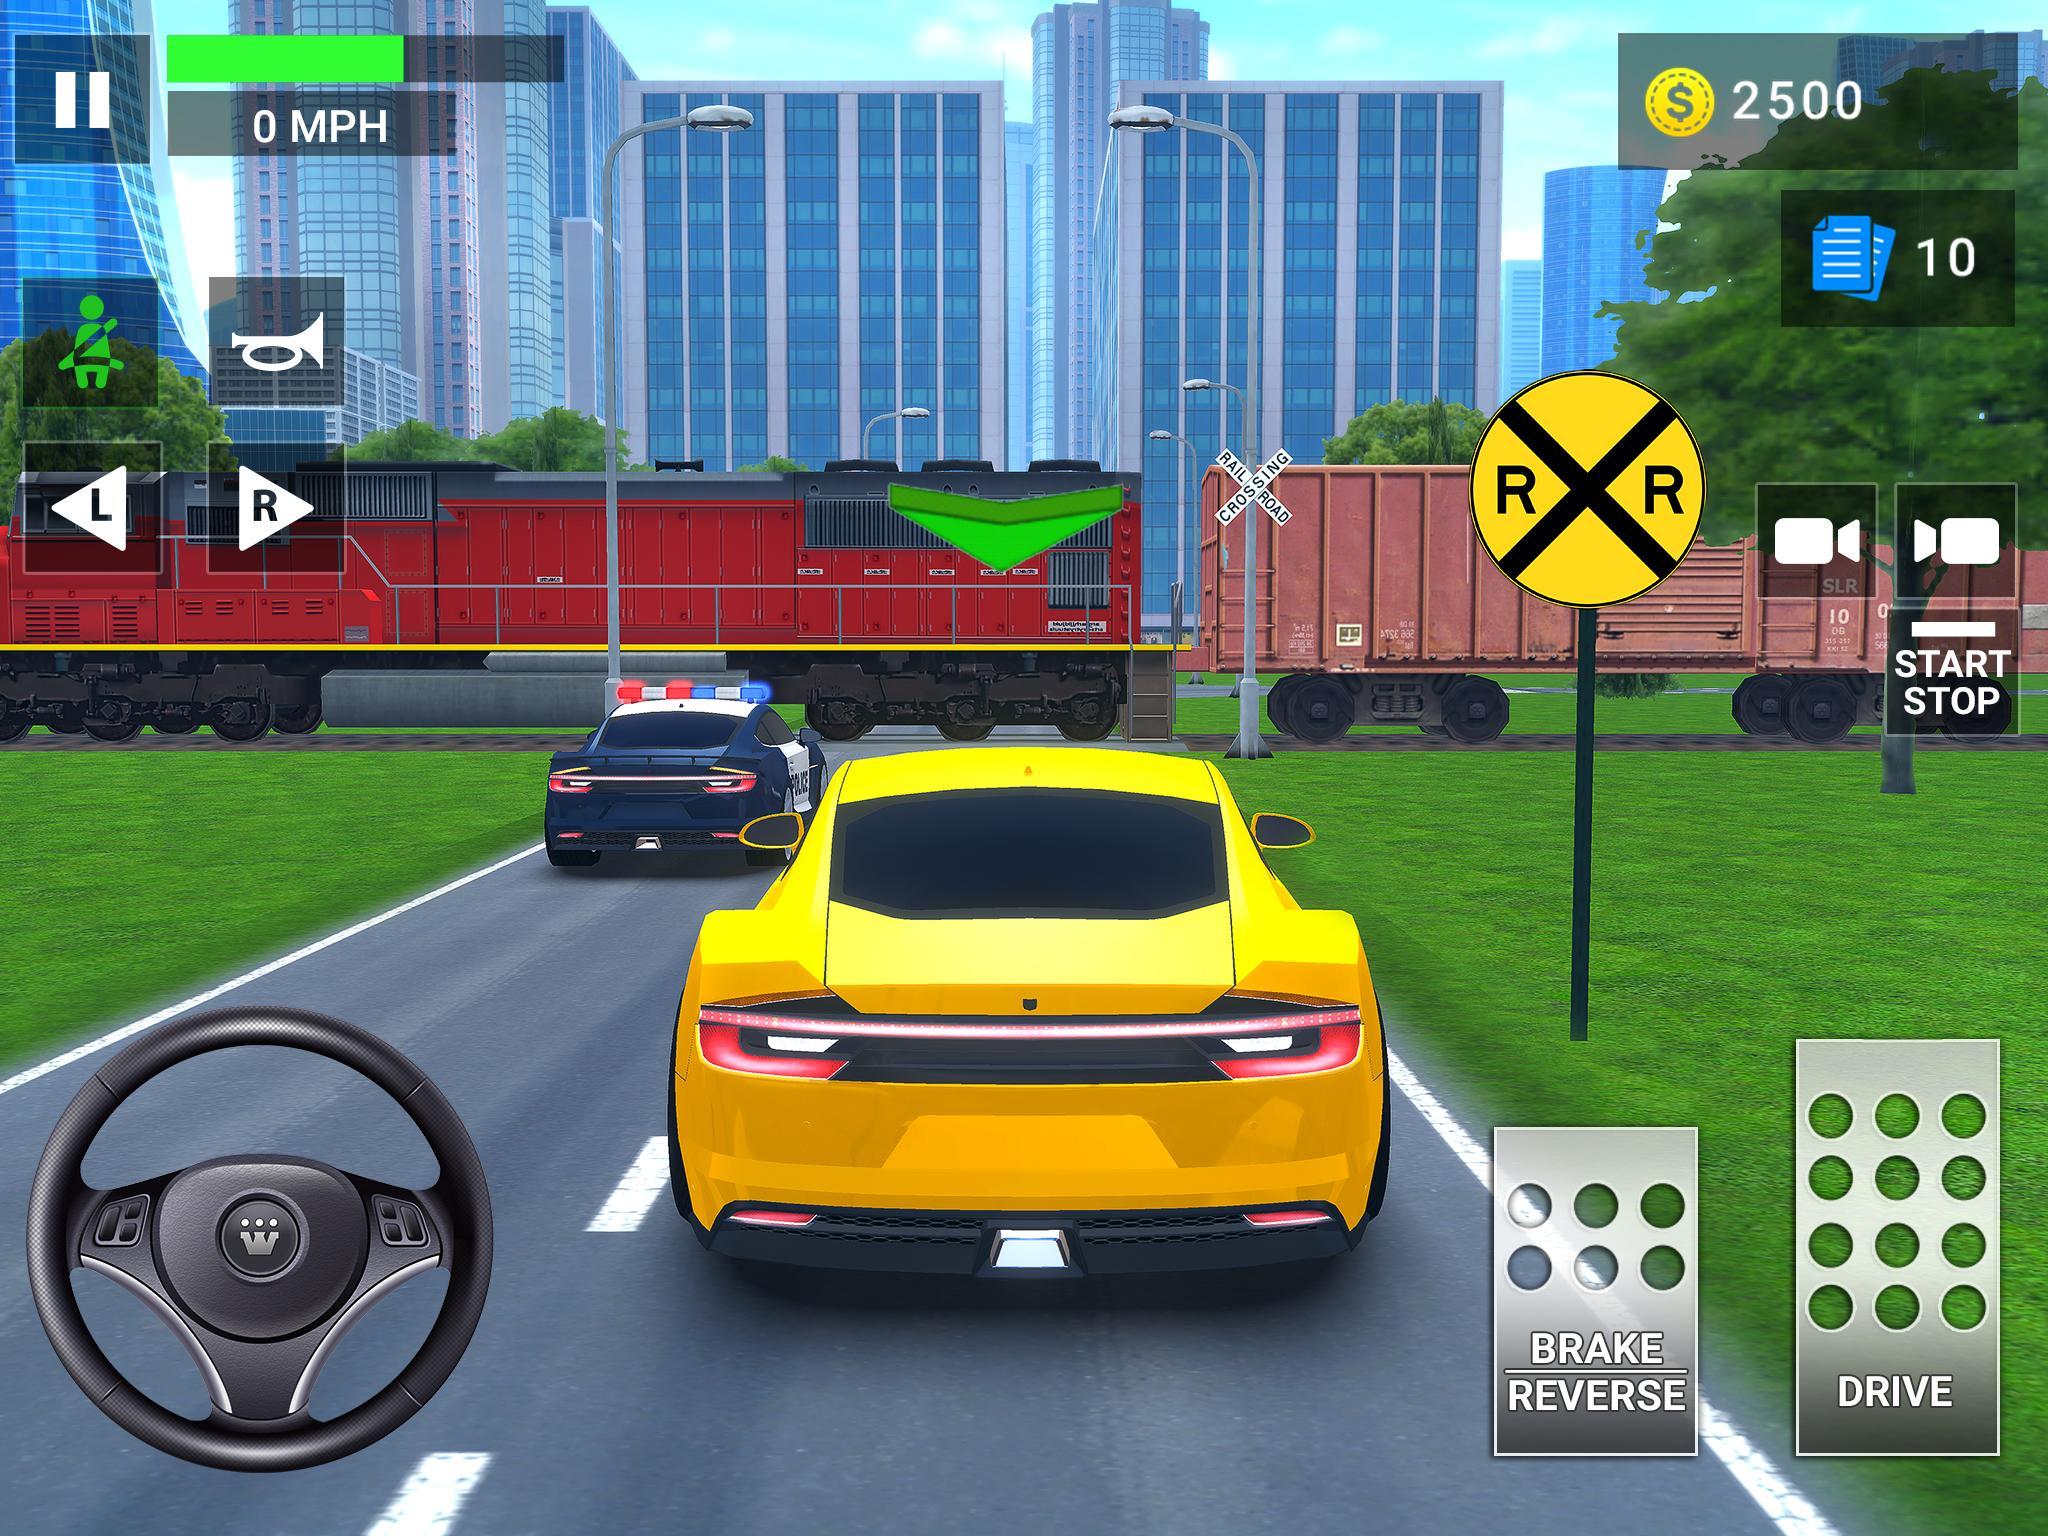 Driving Academy 2 Car Games & Driving School 2021 2.1 Screenshot 9